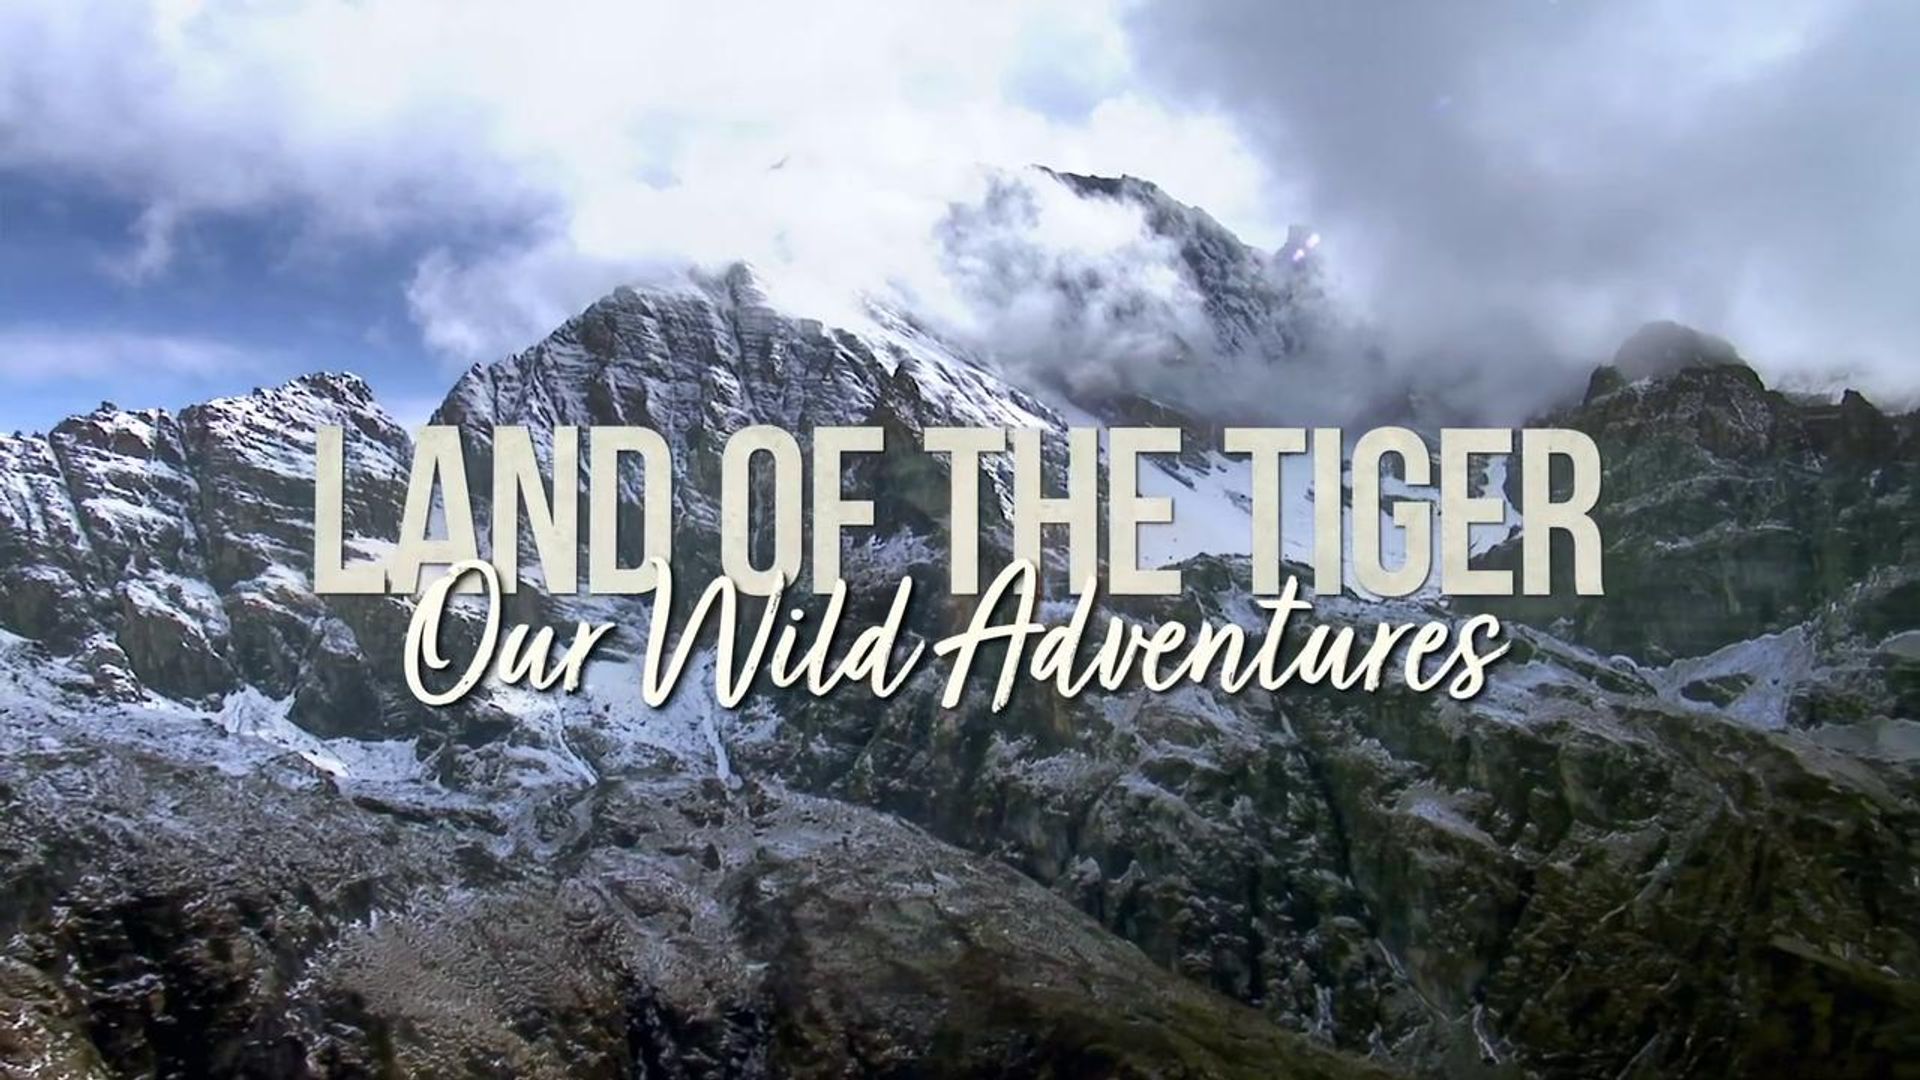 Our Wild Adventures background